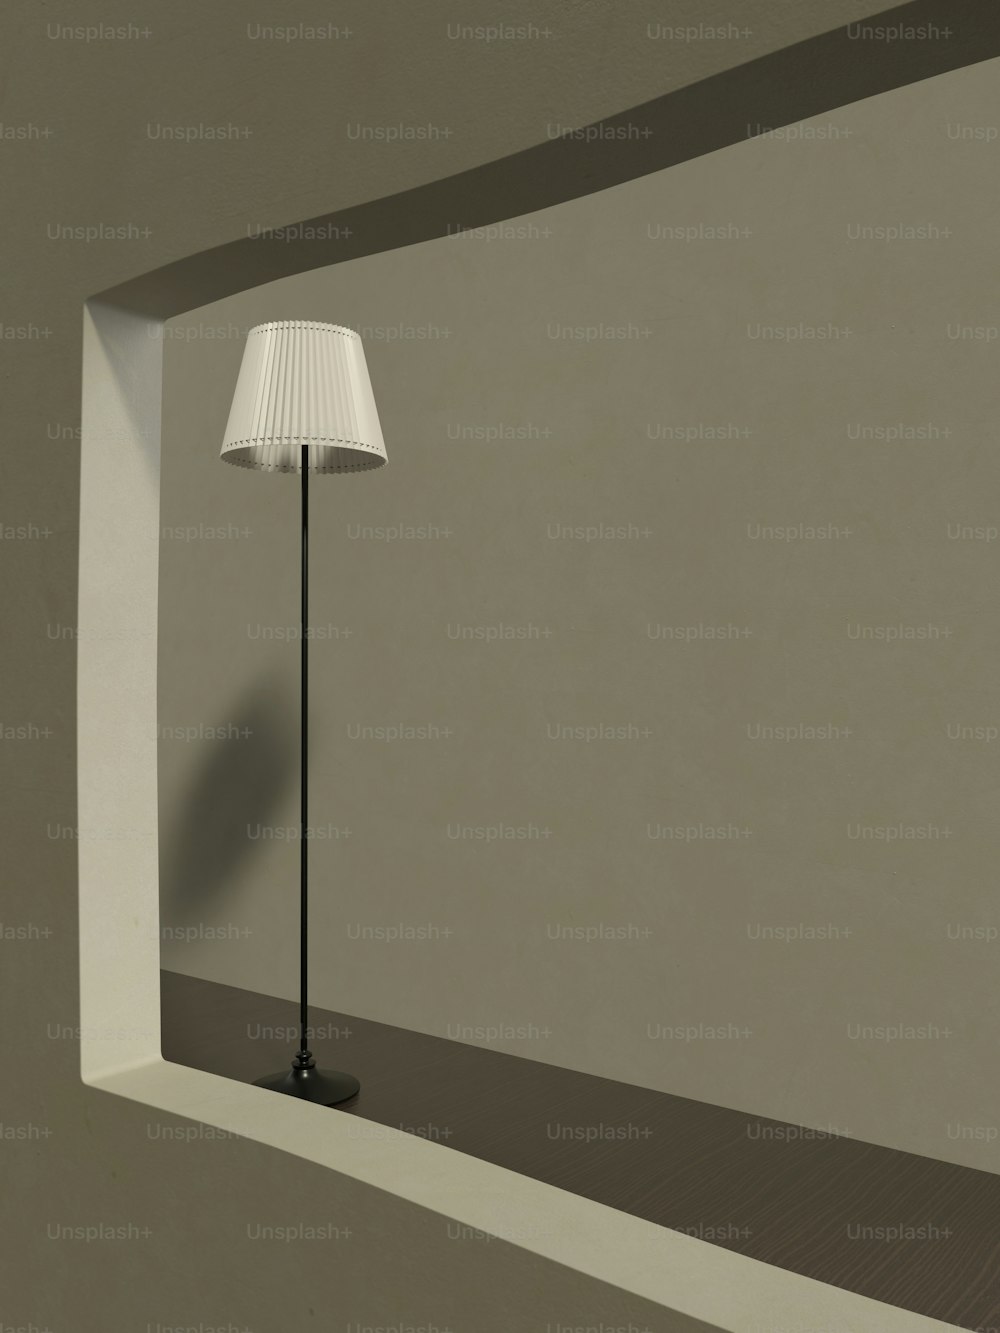 una lampada da terra in un angolo di una stanza